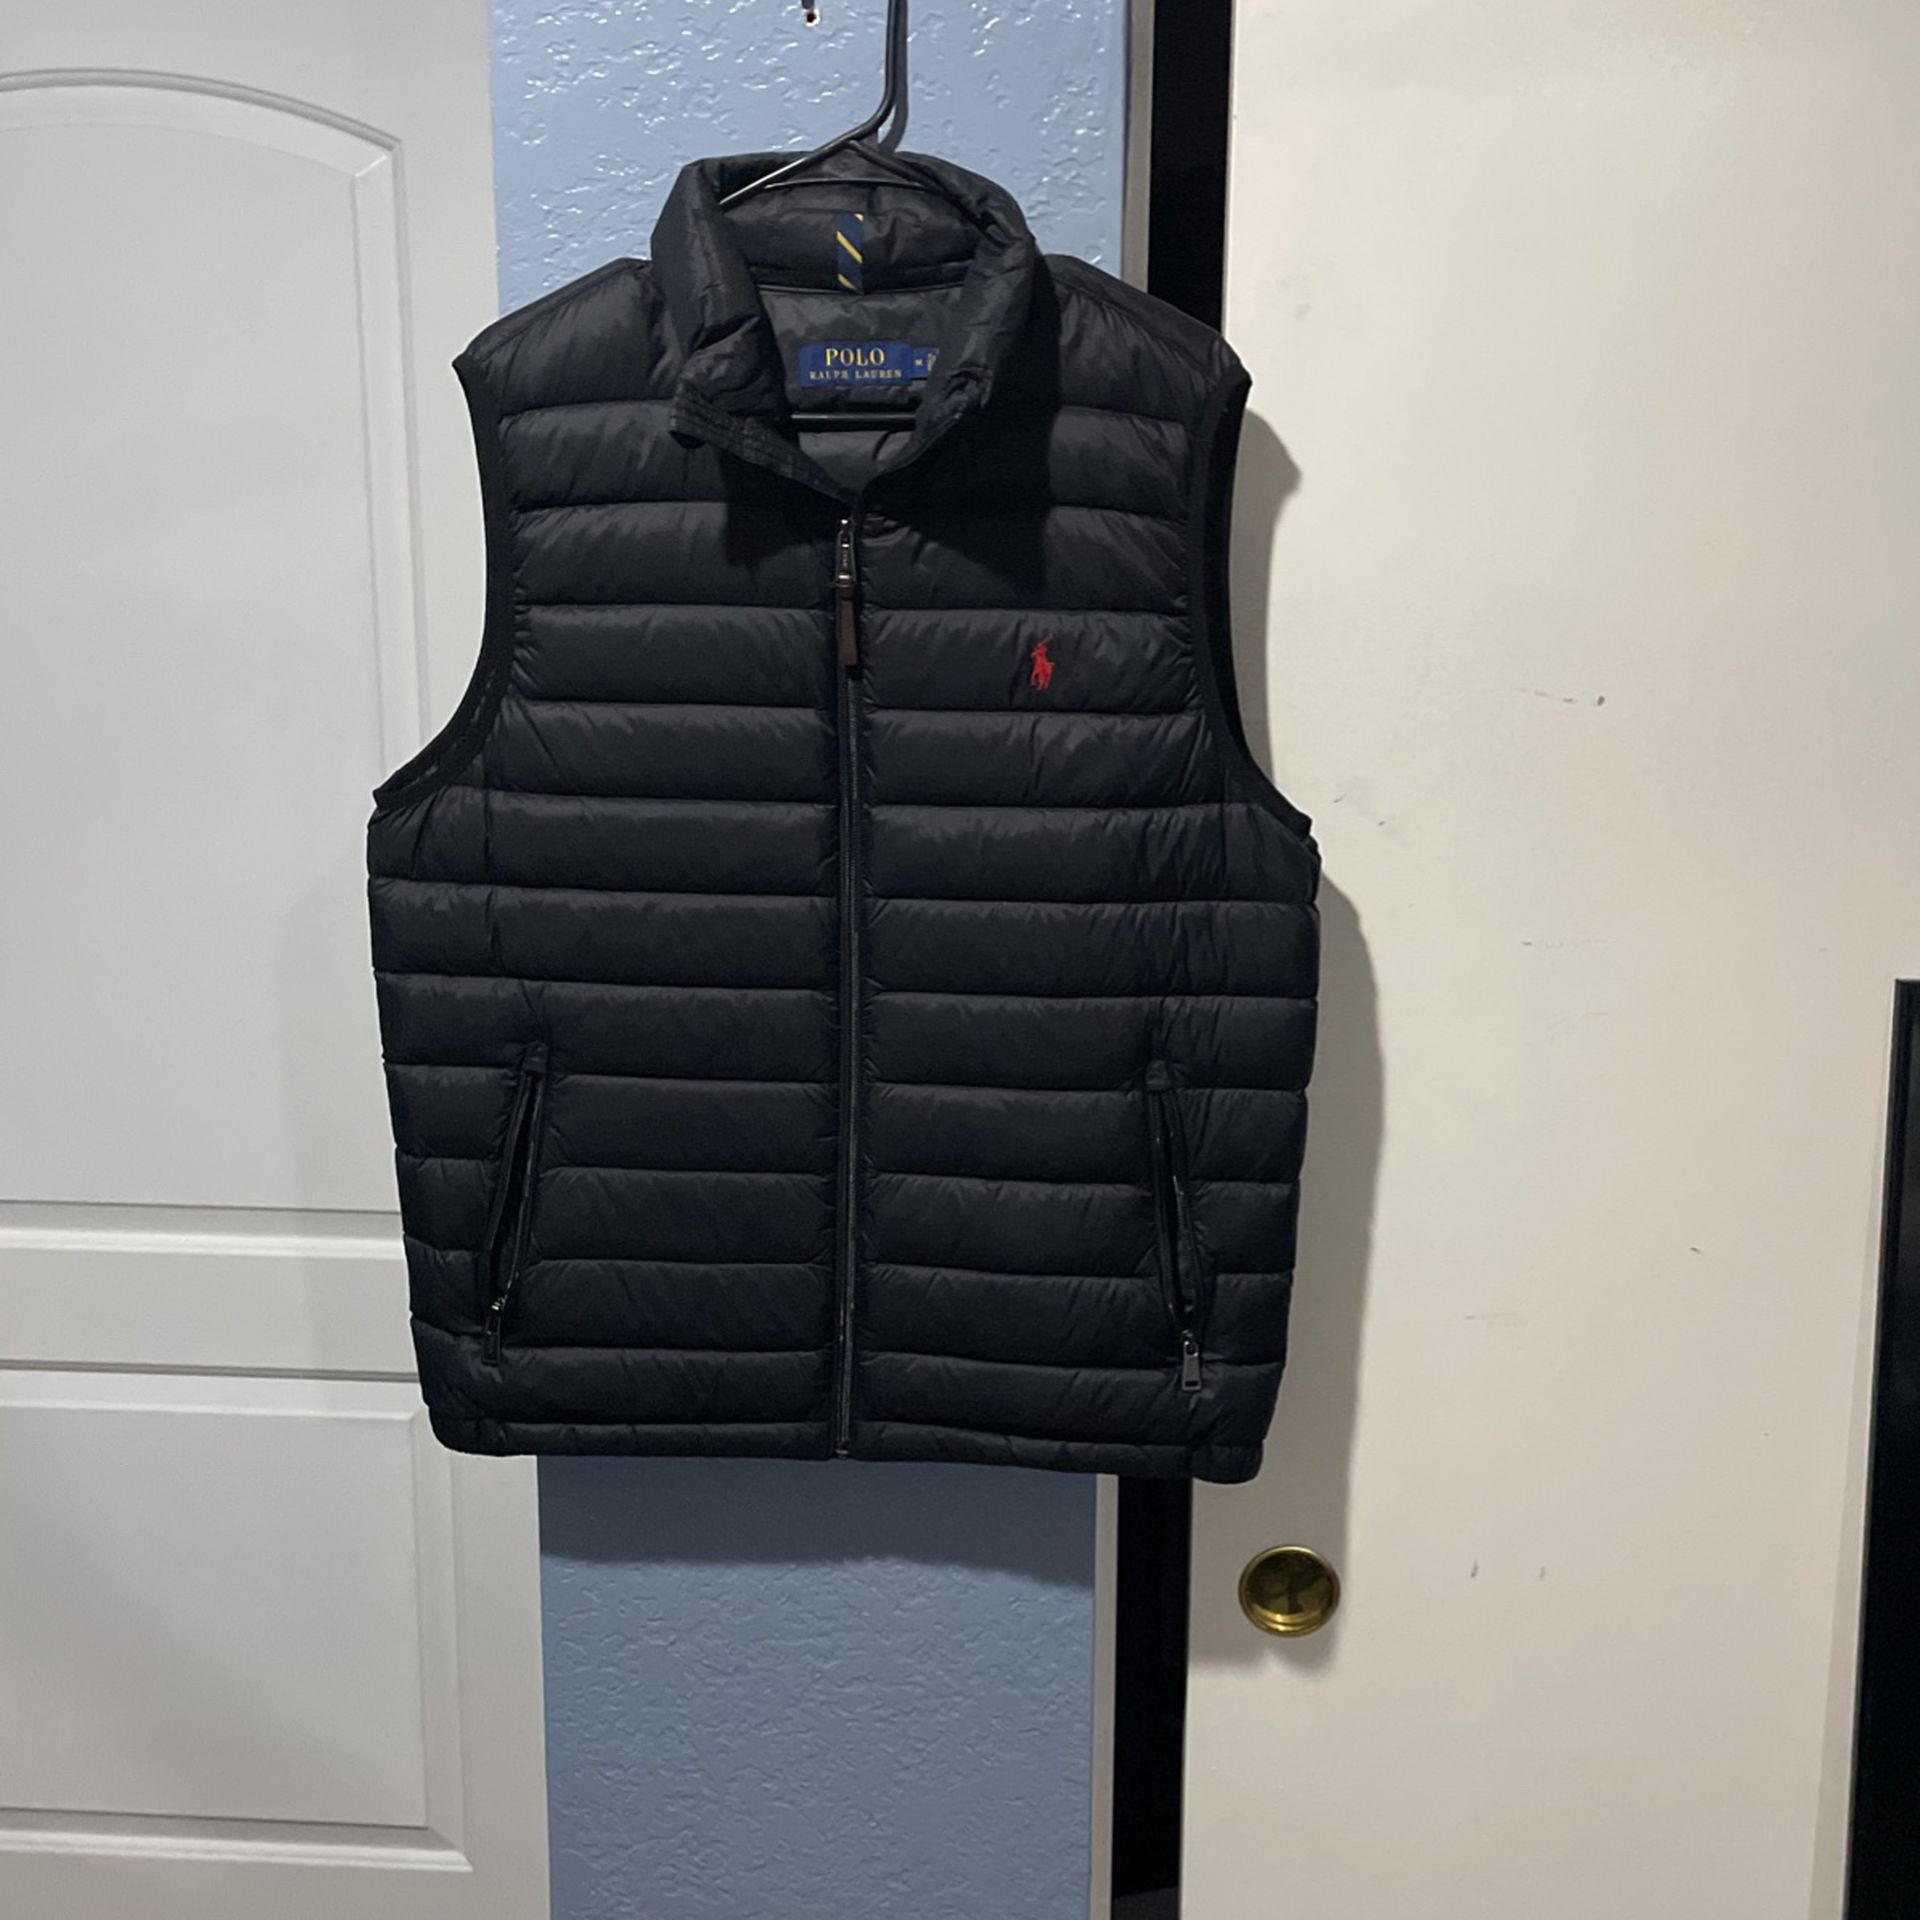 Black Polo Puffed Vest Jacket 